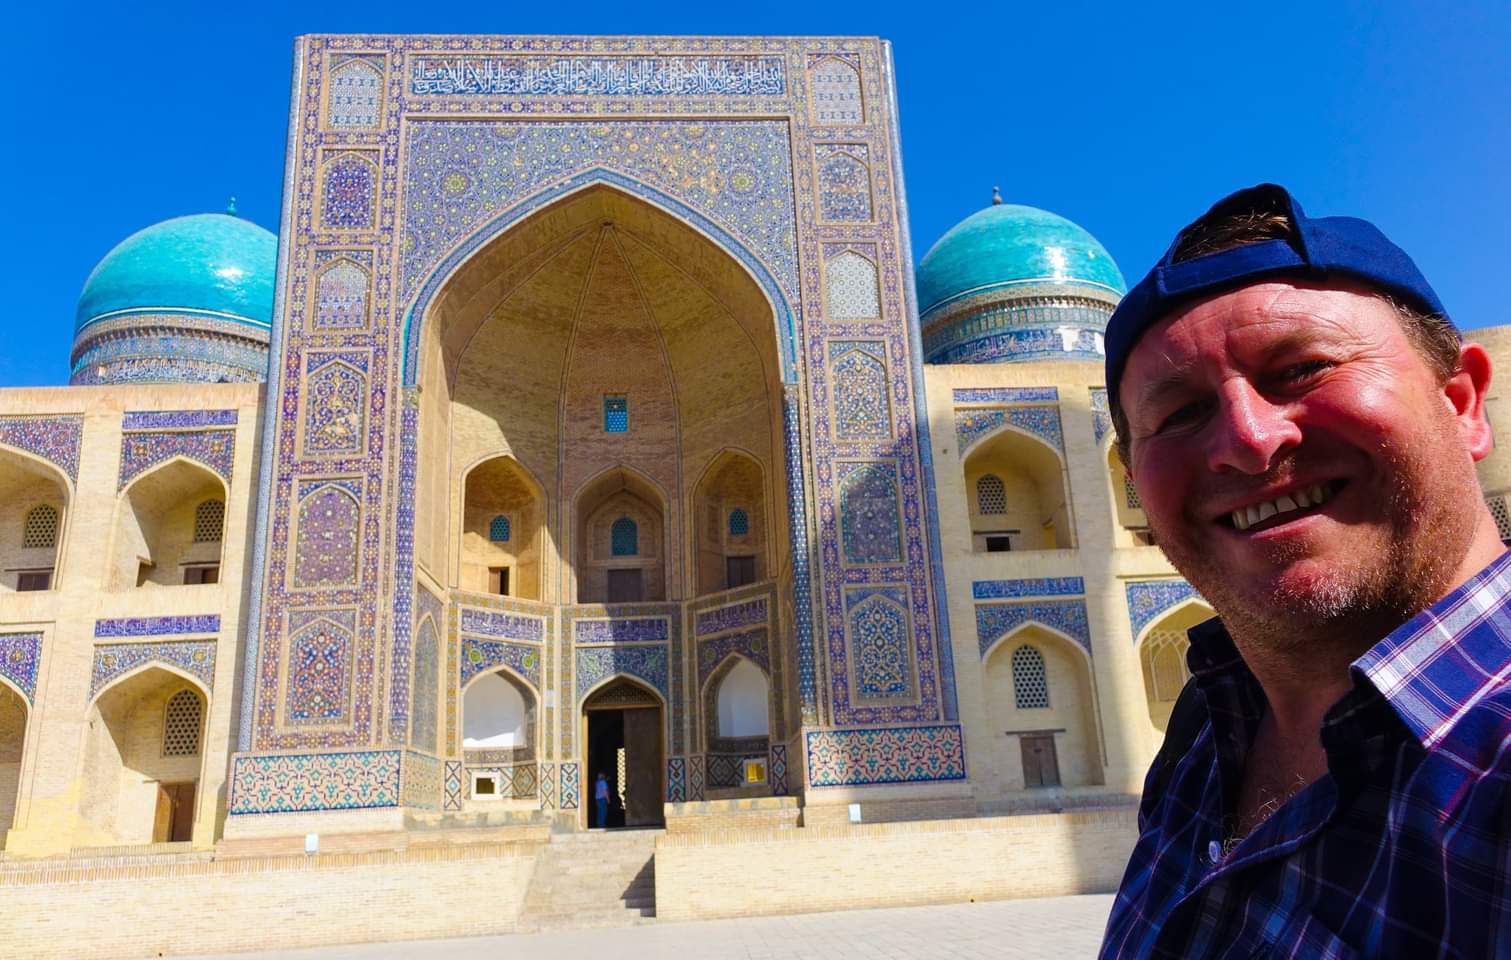 Bukhara, Uzbekistan. Endless Mosques, Madrassas, Bazaars and Caravanserais